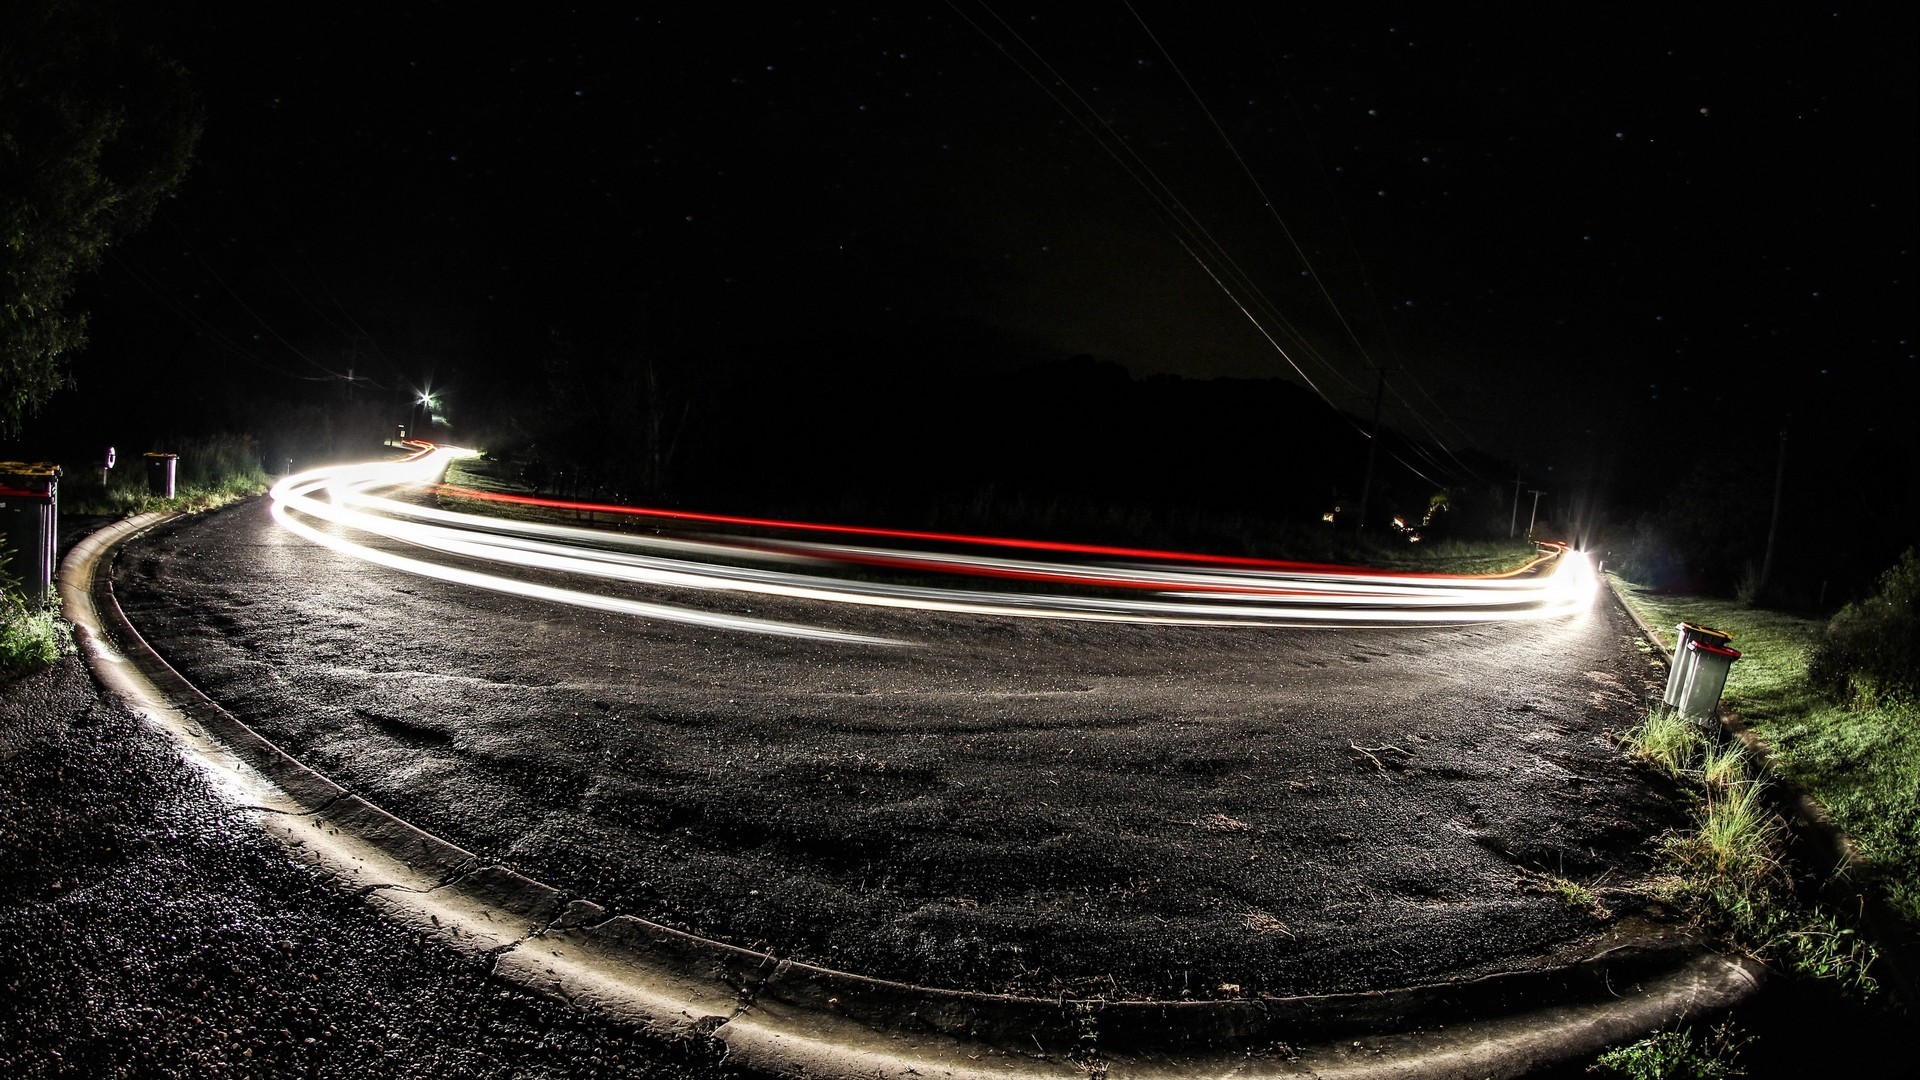 General 1920x1080 long exposure night road lights photography light trails dark asphalt